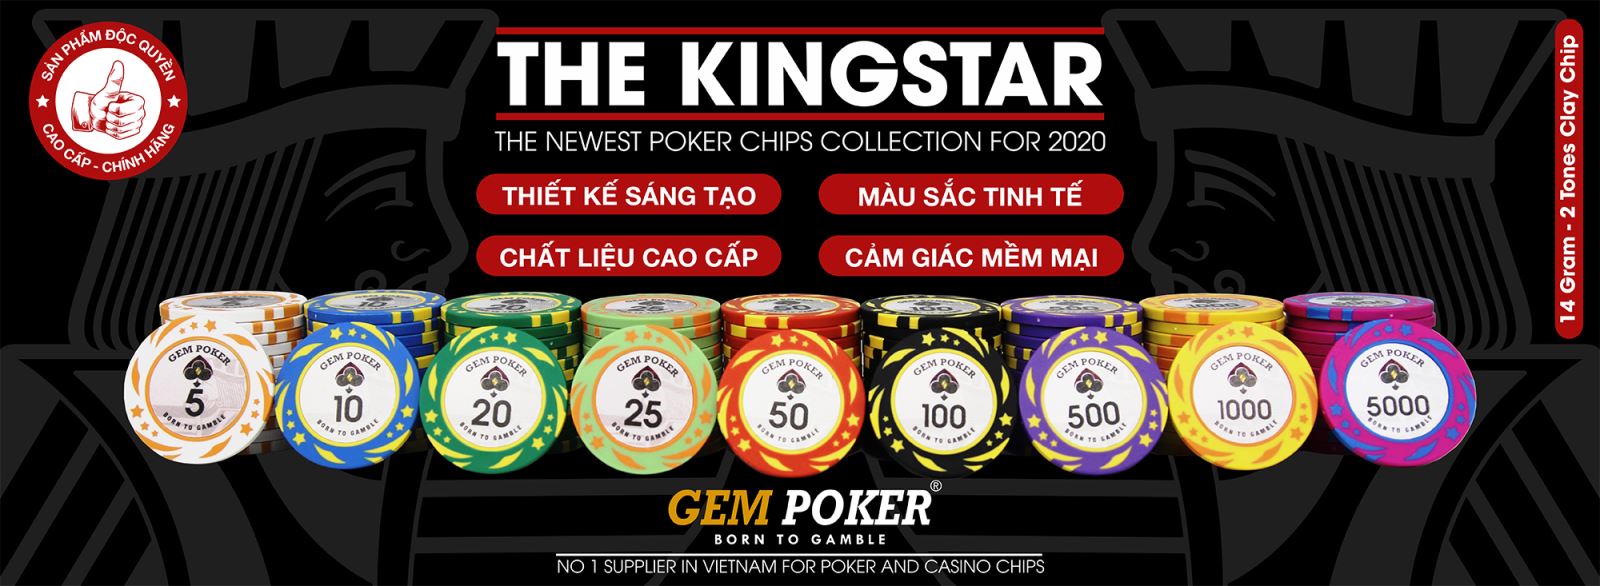 GEM Travel 500 Chip Poker Clay Kingstar Có Số